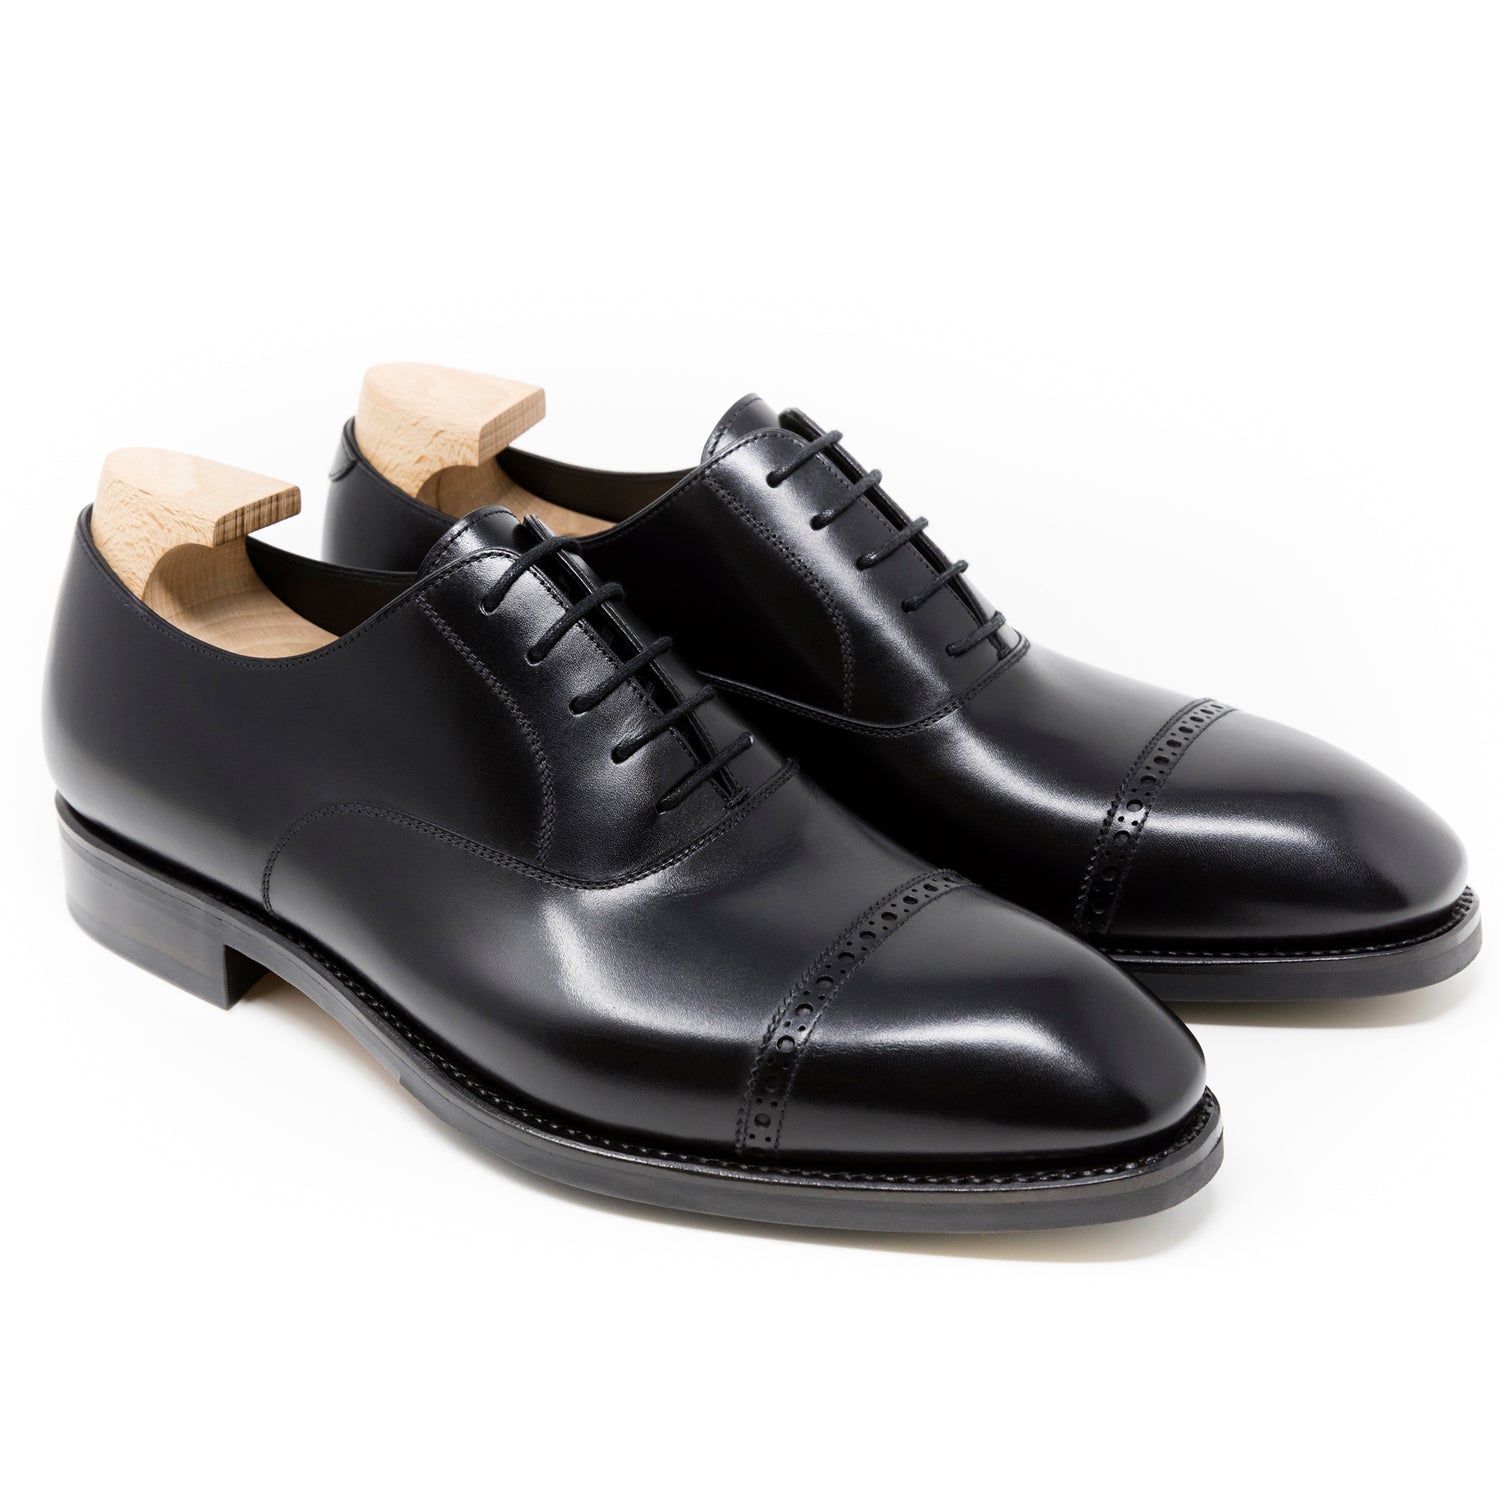 TLB Mallorca leather shoes 503 / ALAN / BOXCALF BLACK